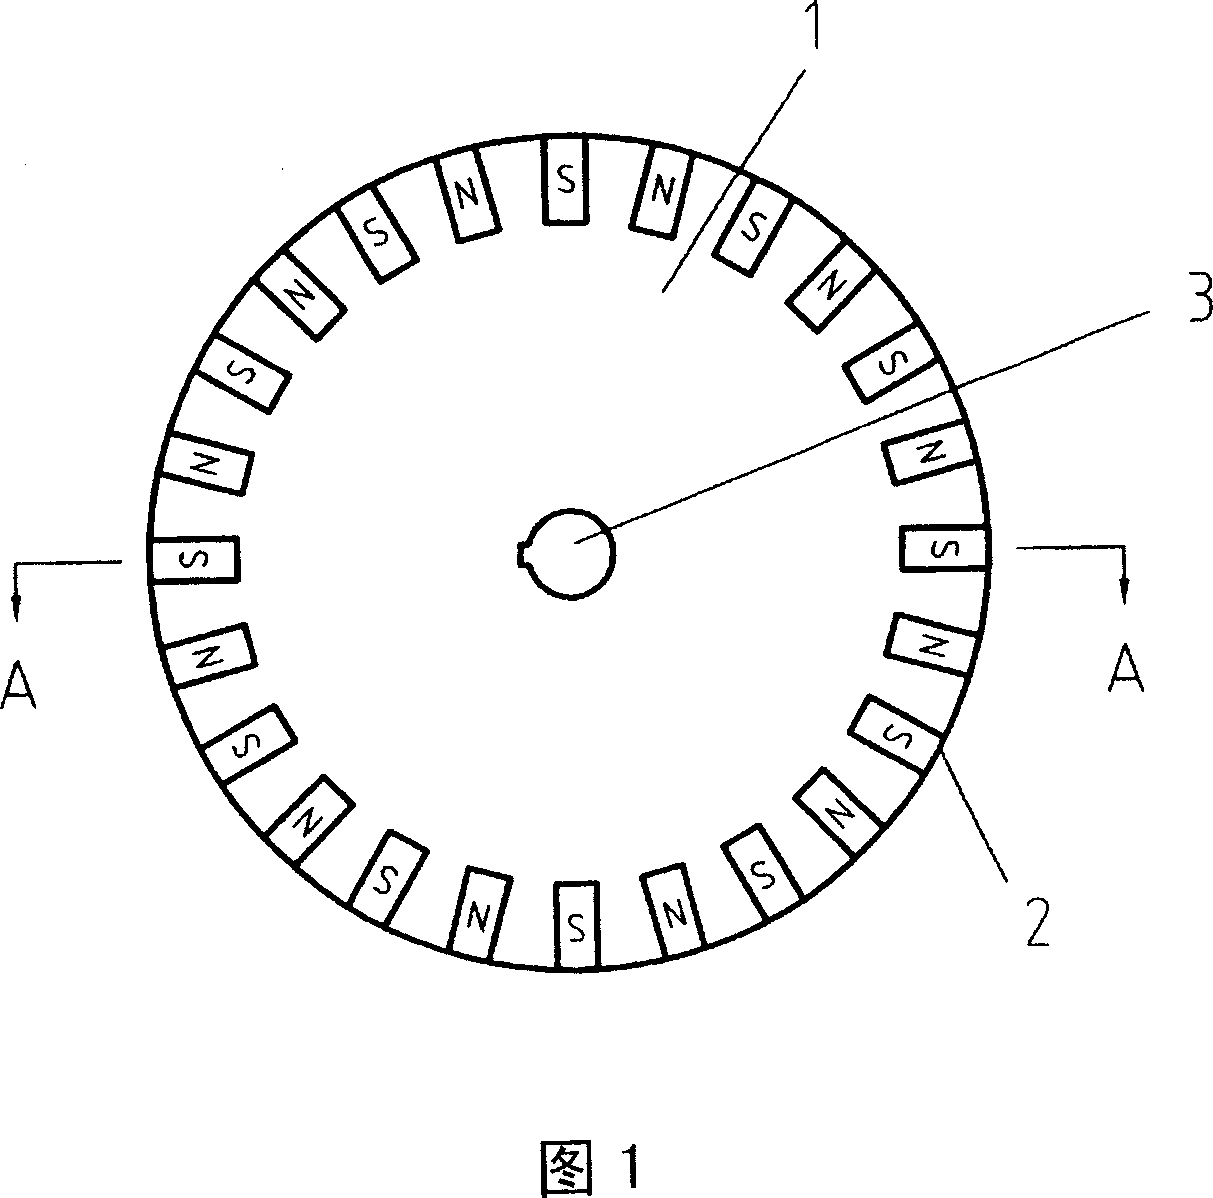 Permanent magnetic amtipodal gear wheel